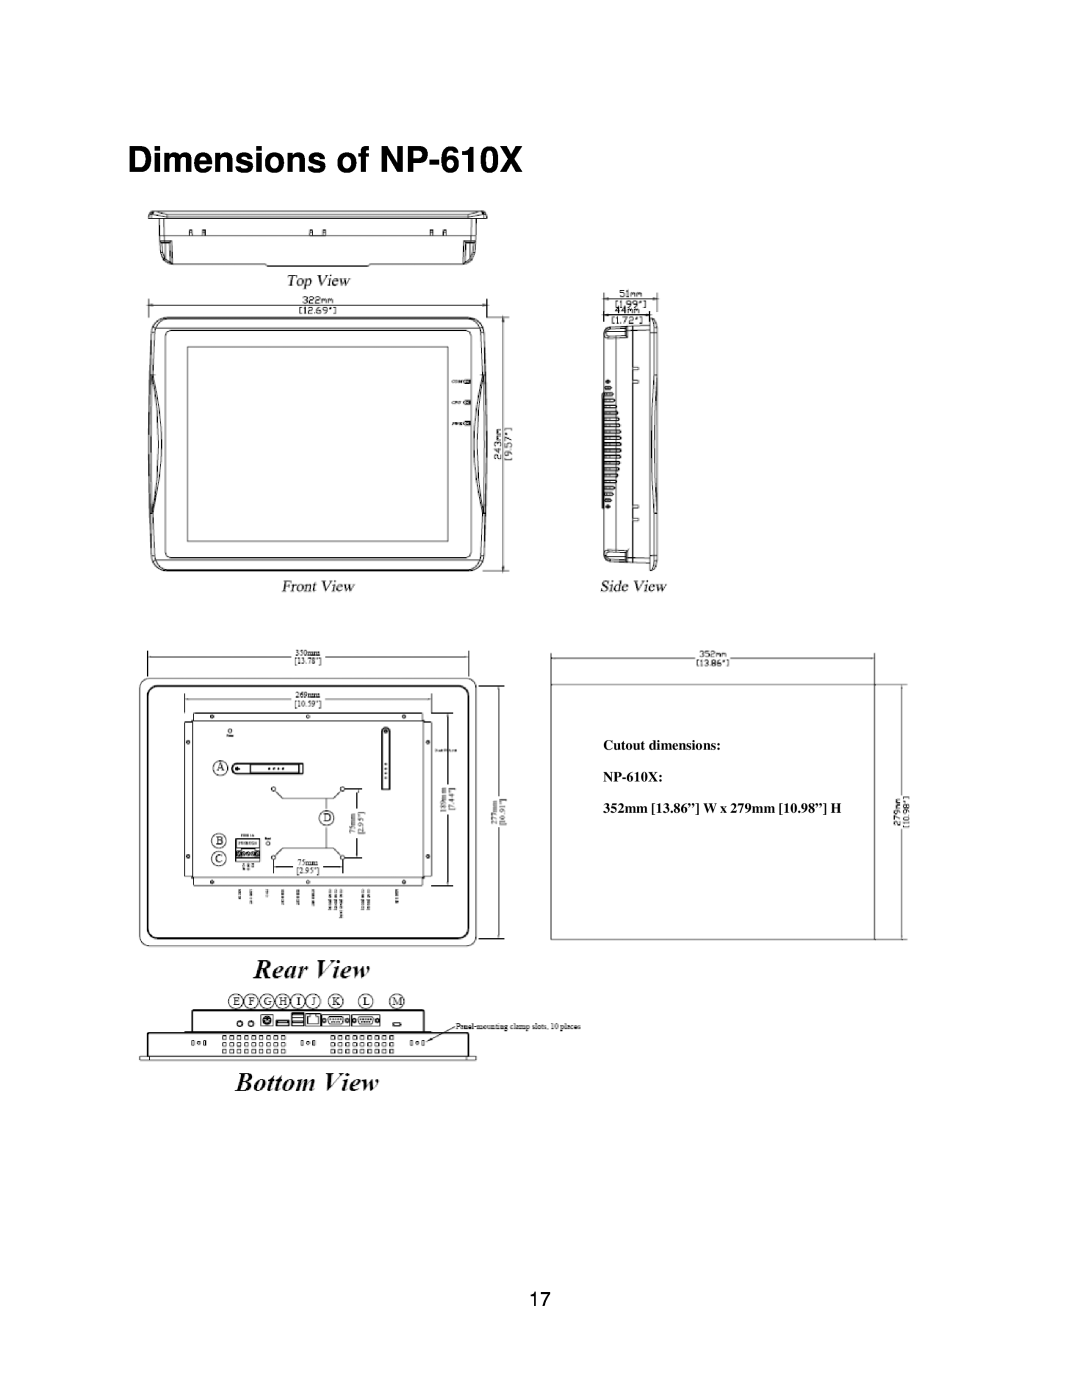 Nextar user manual Dimensions of NP-610X, Cutout dimensions NP-610X 352mm 13.86” W x 279mm 10.98” H 